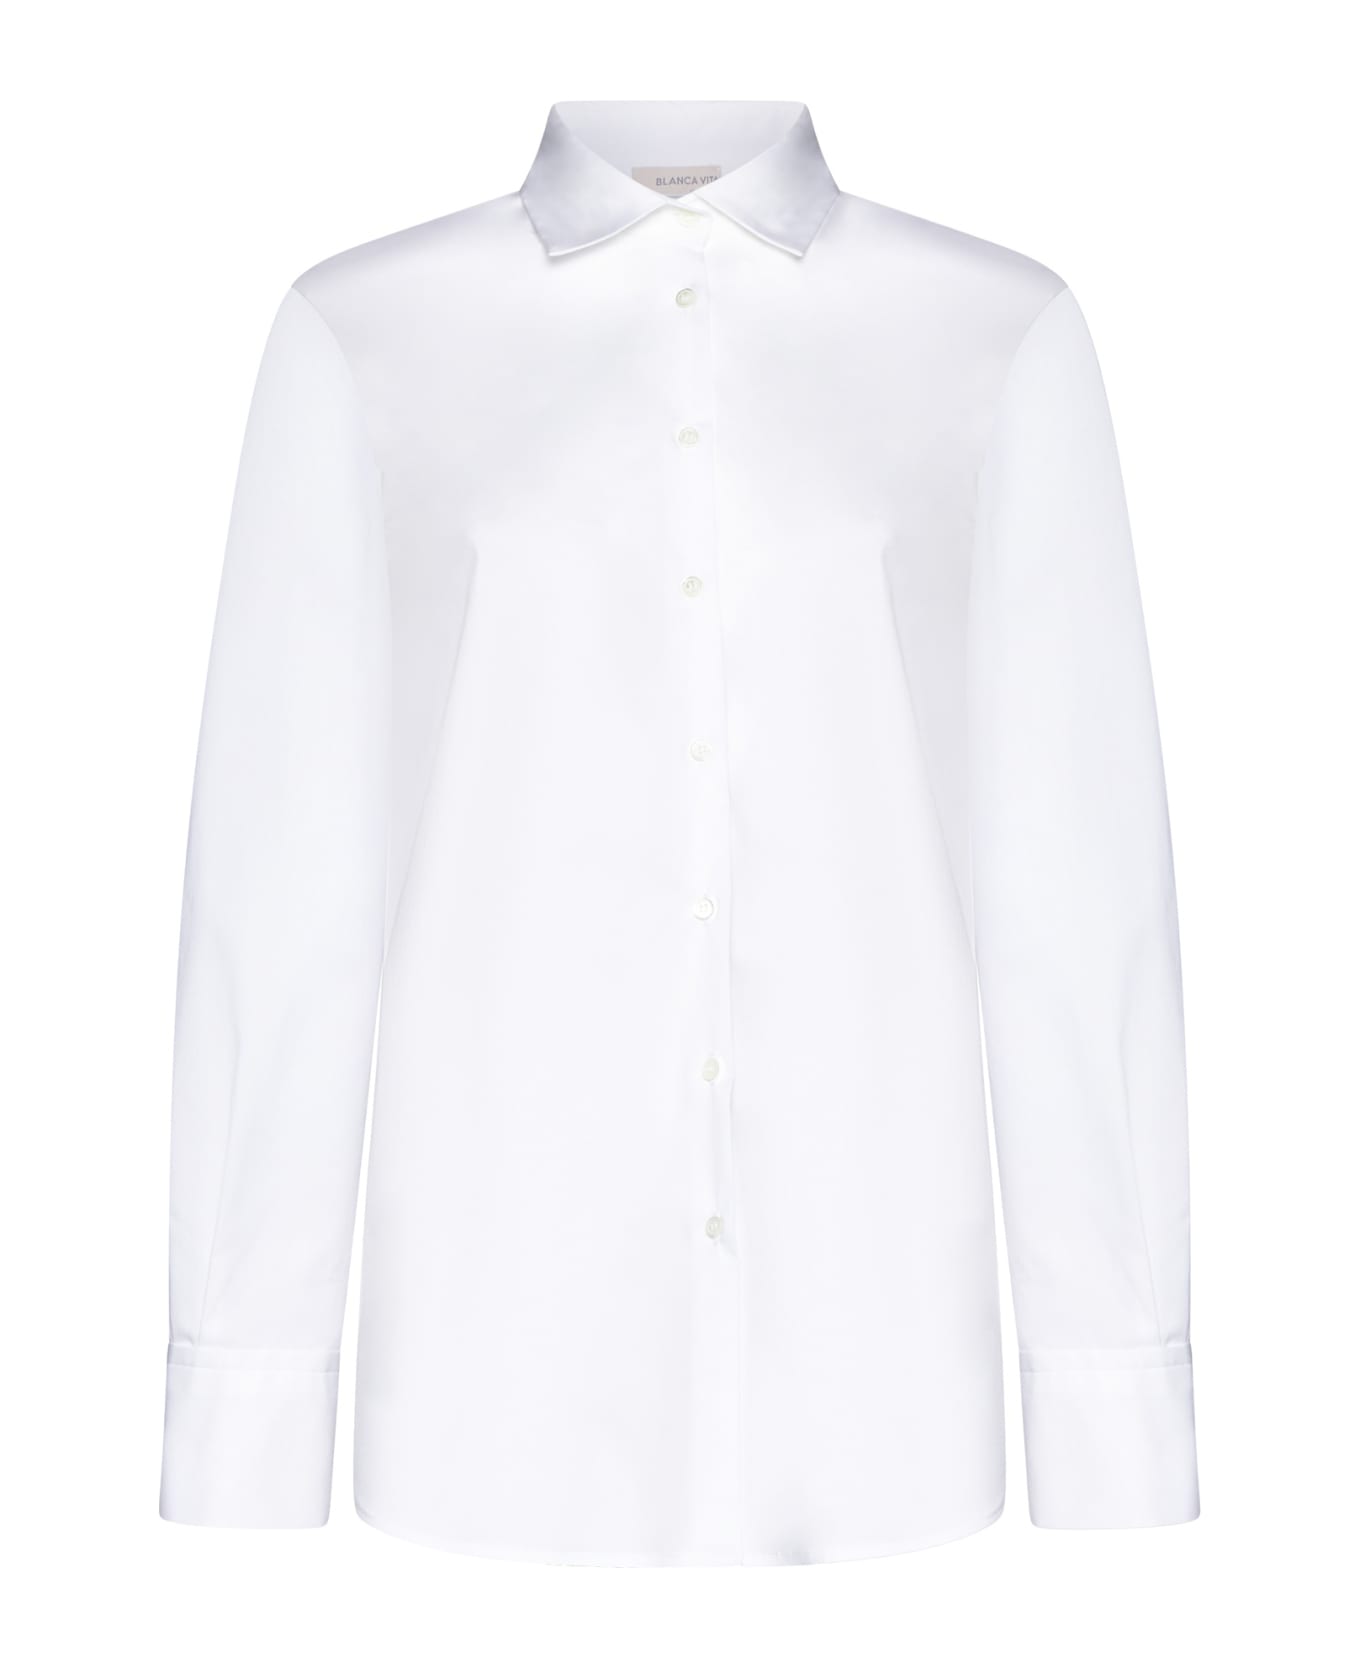 Blanca Vita Shirt - Diamante